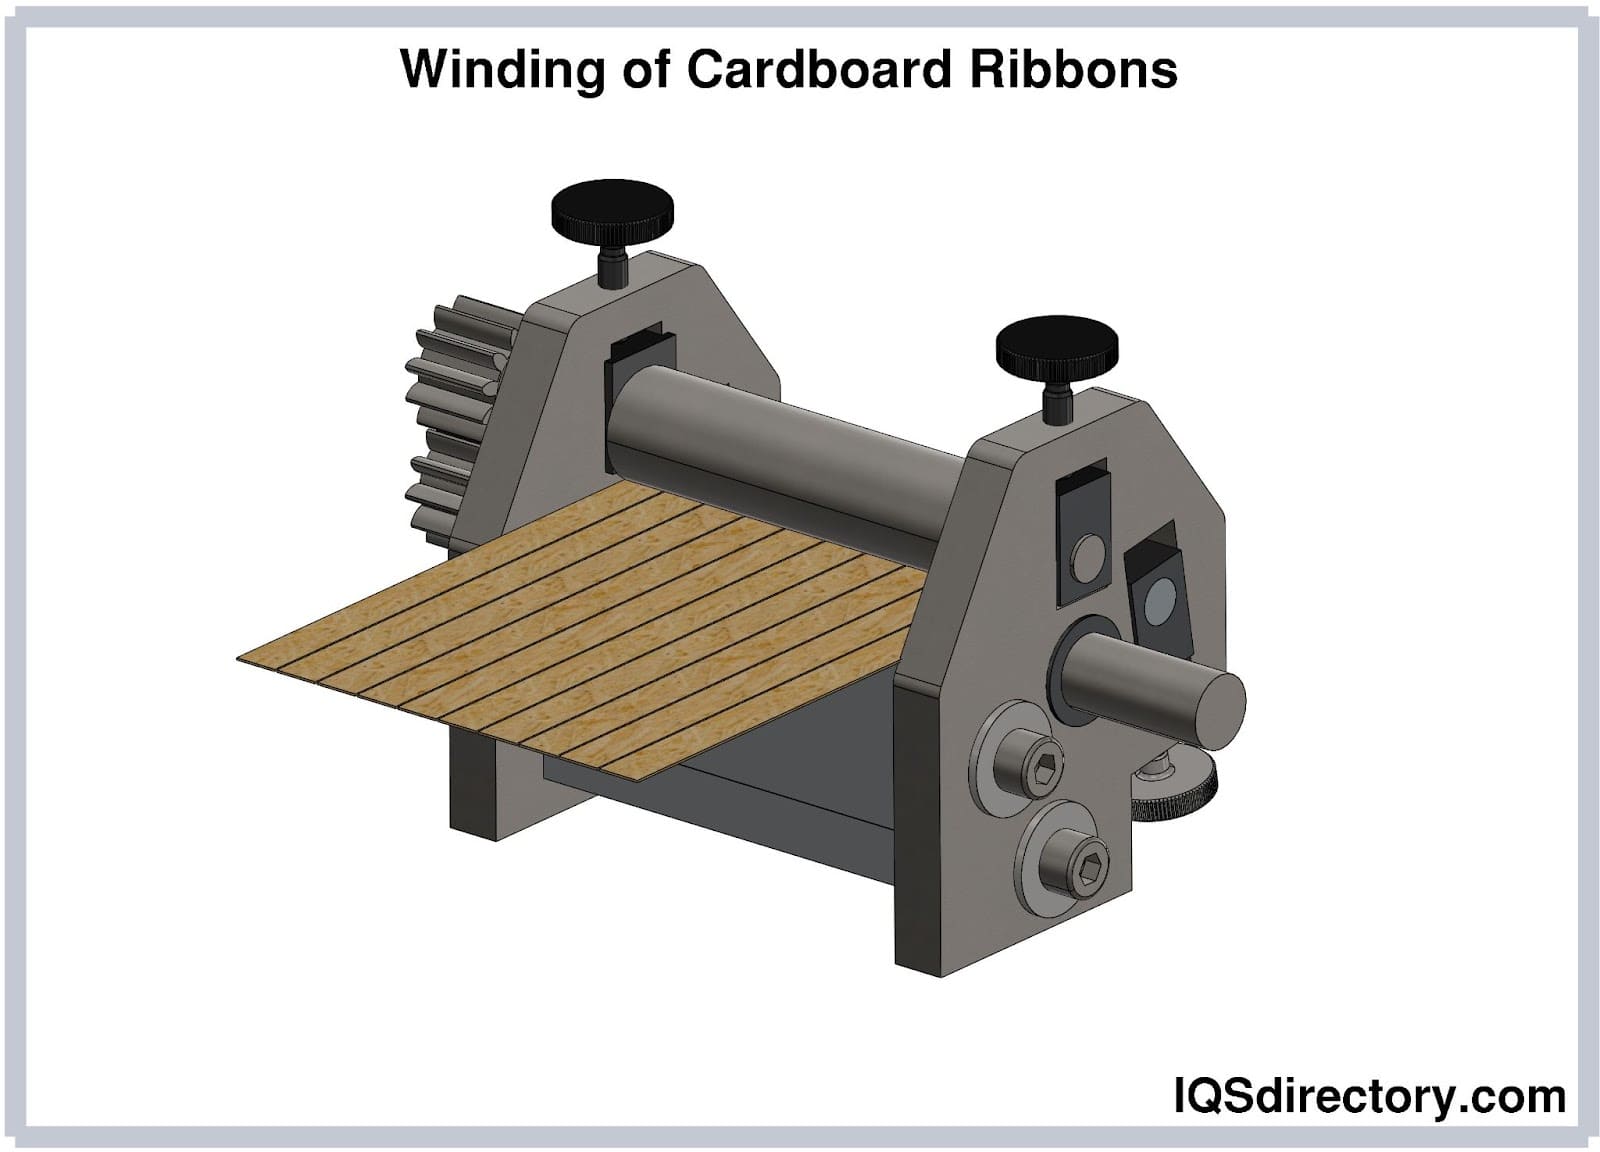 Winding of Cardboard Ribbons